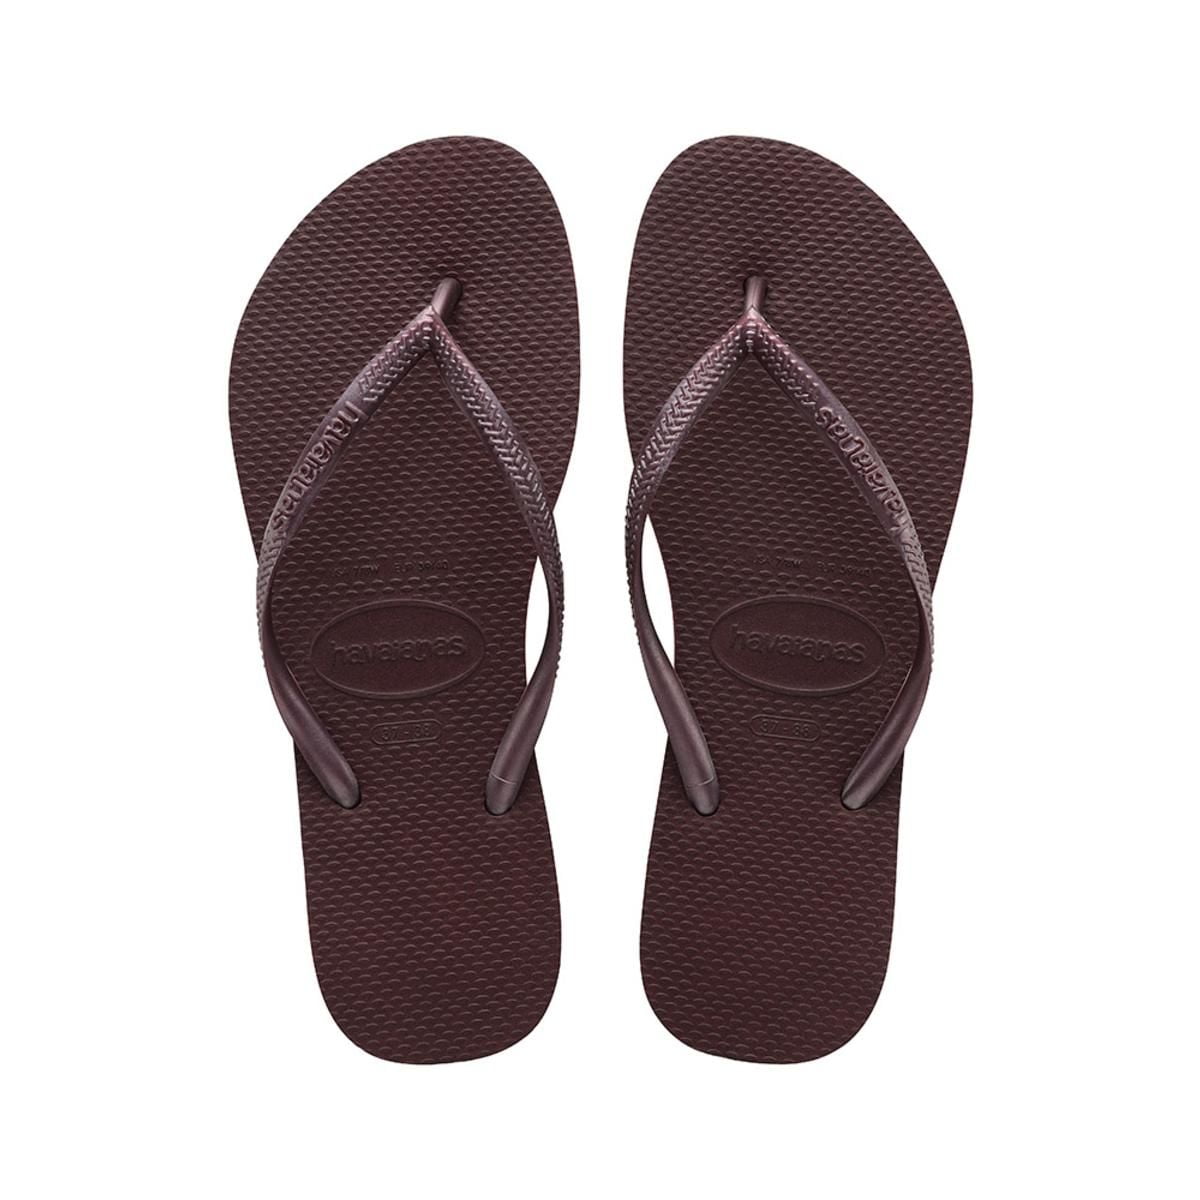 plain high heeled criss cross peep toe casual outdoor wedge sandals